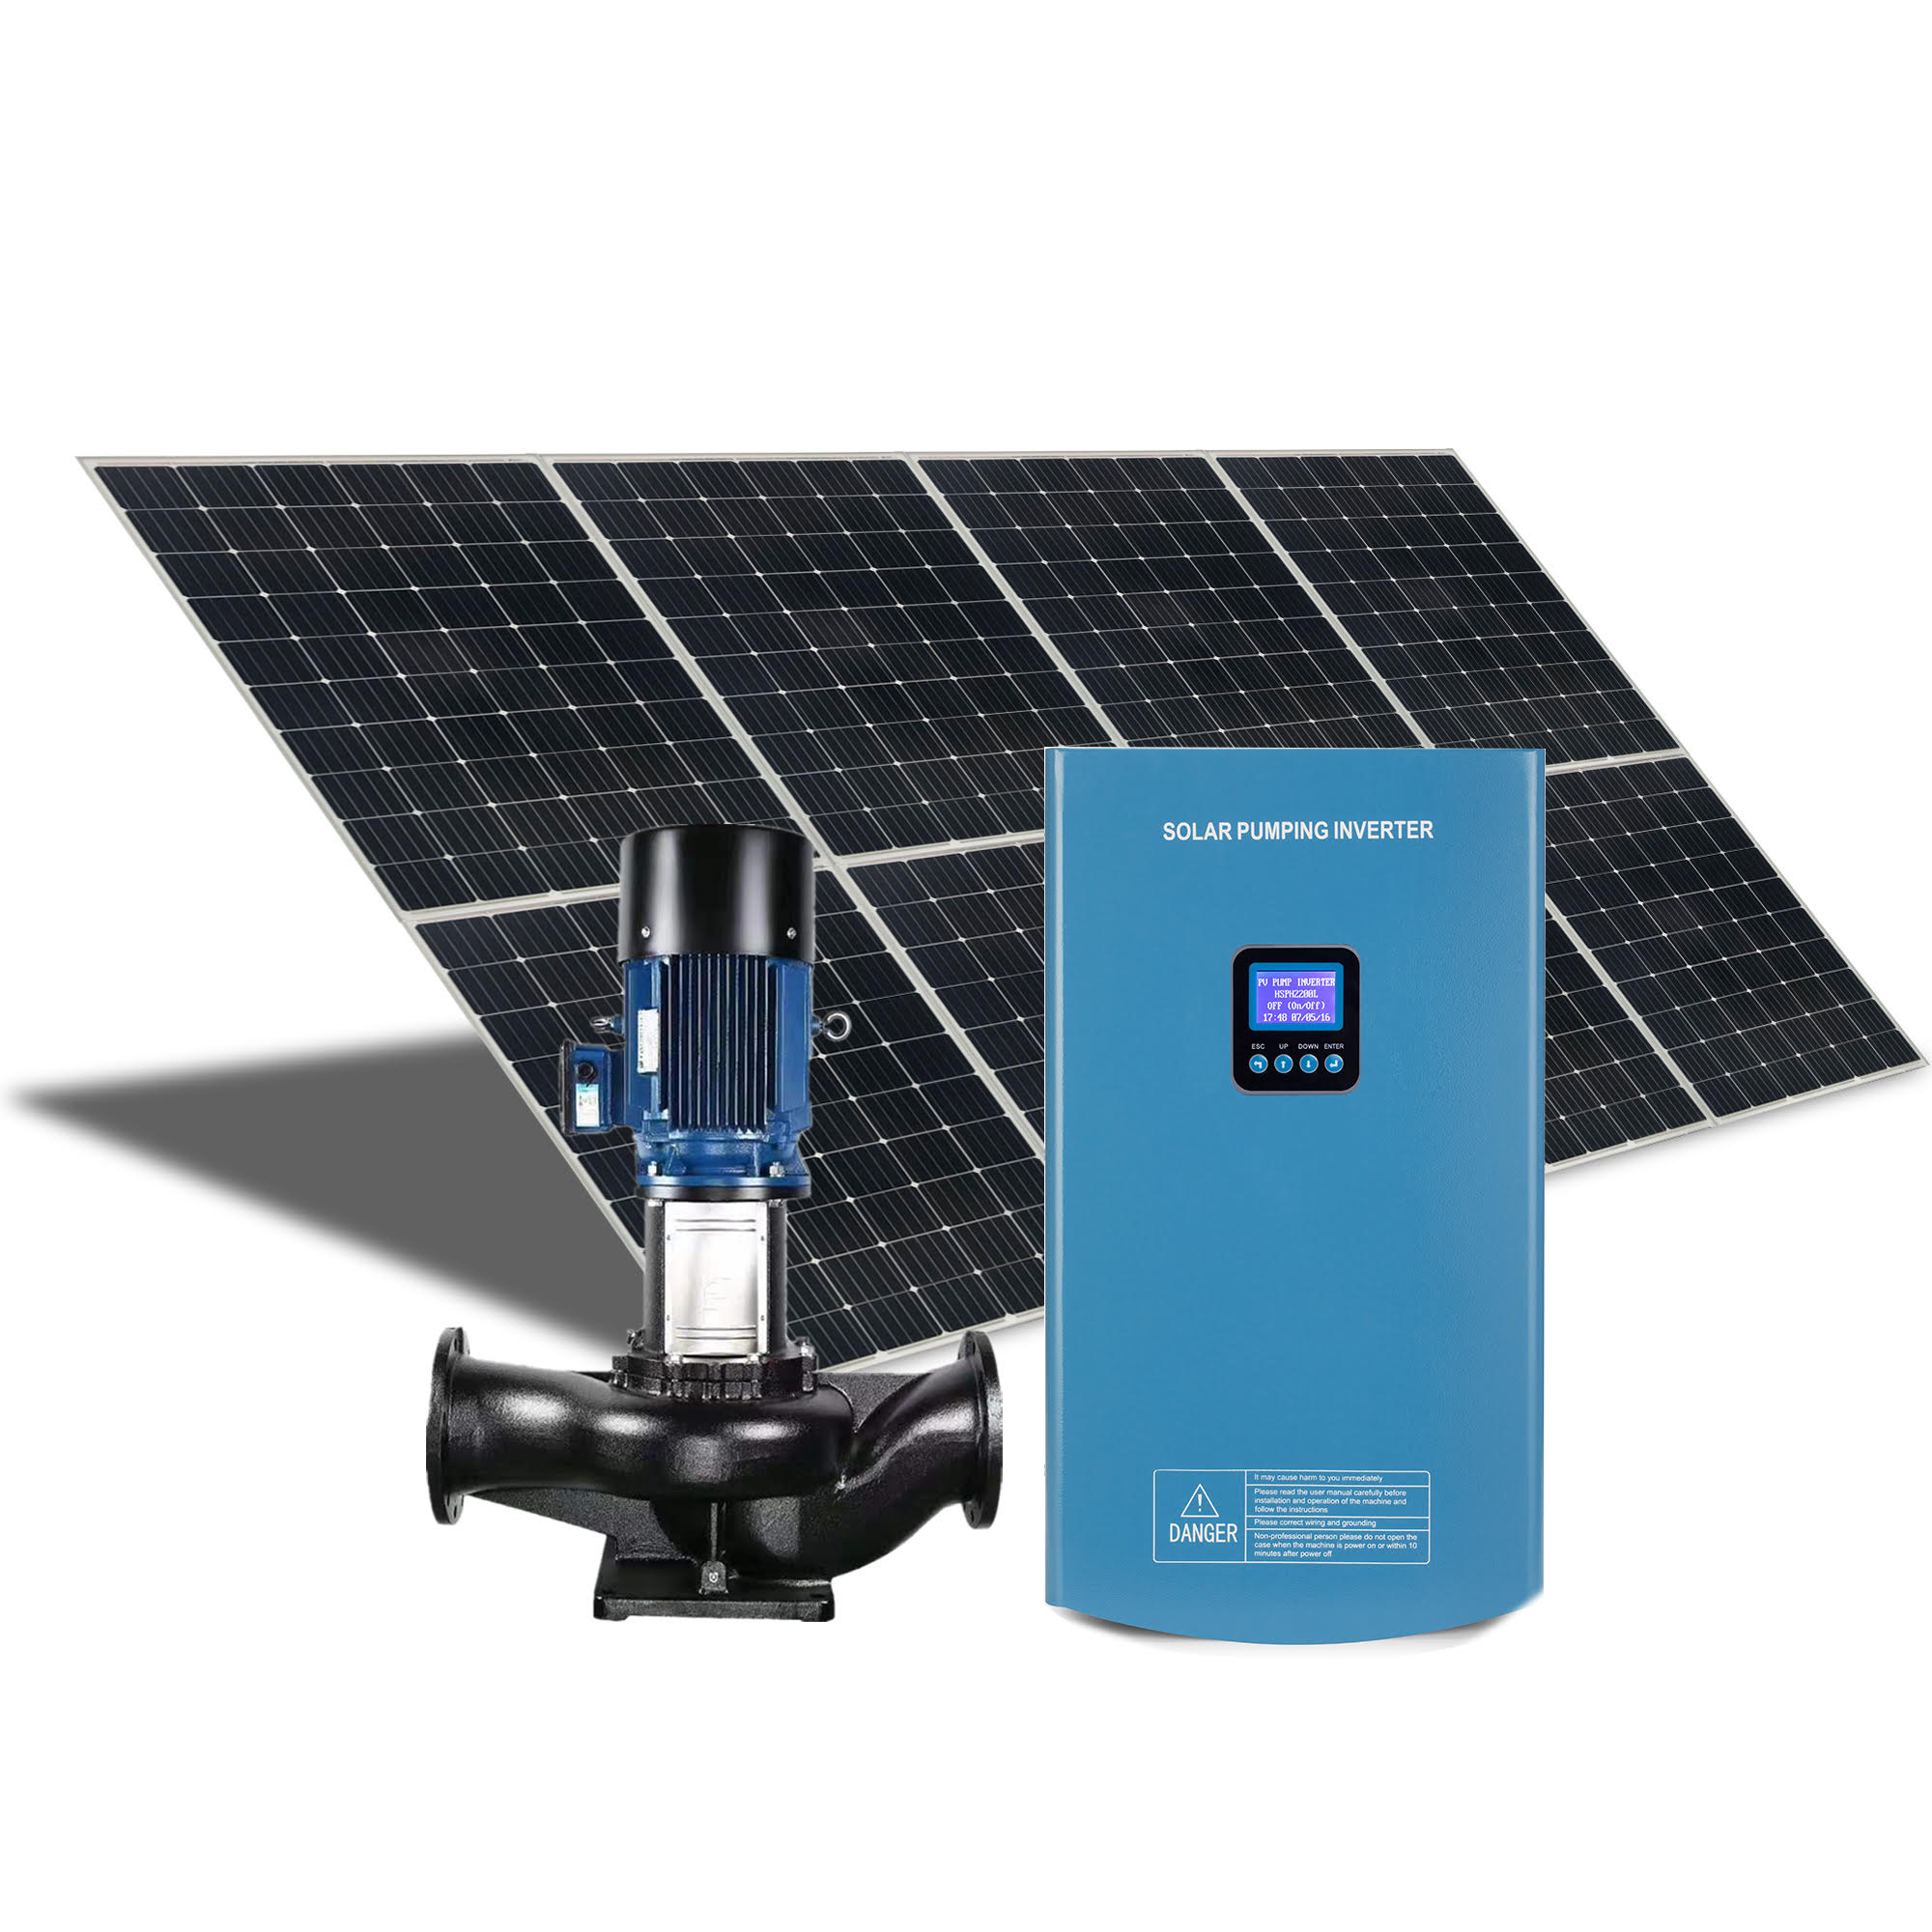 Solar Surface pump